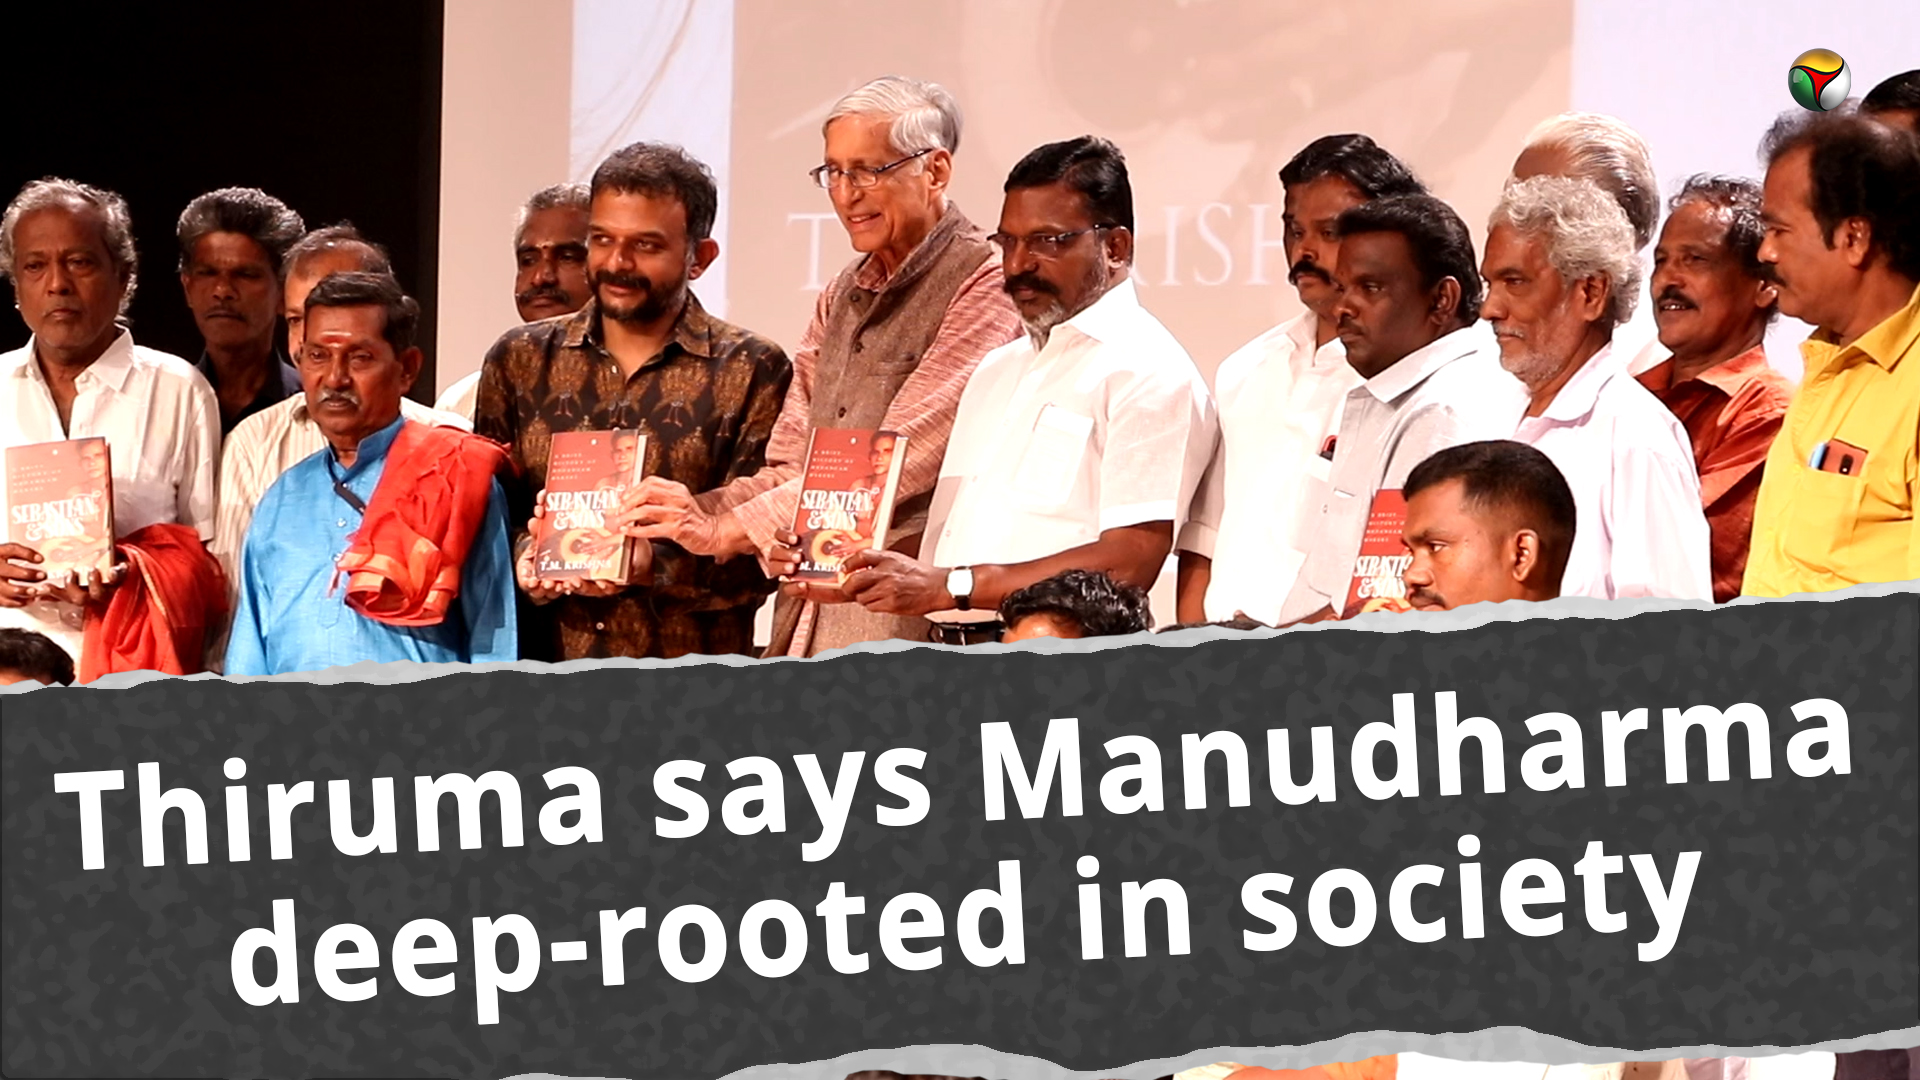 T.M. Krishnas book launch: Thiruma says Manudharma deep-rooted in society